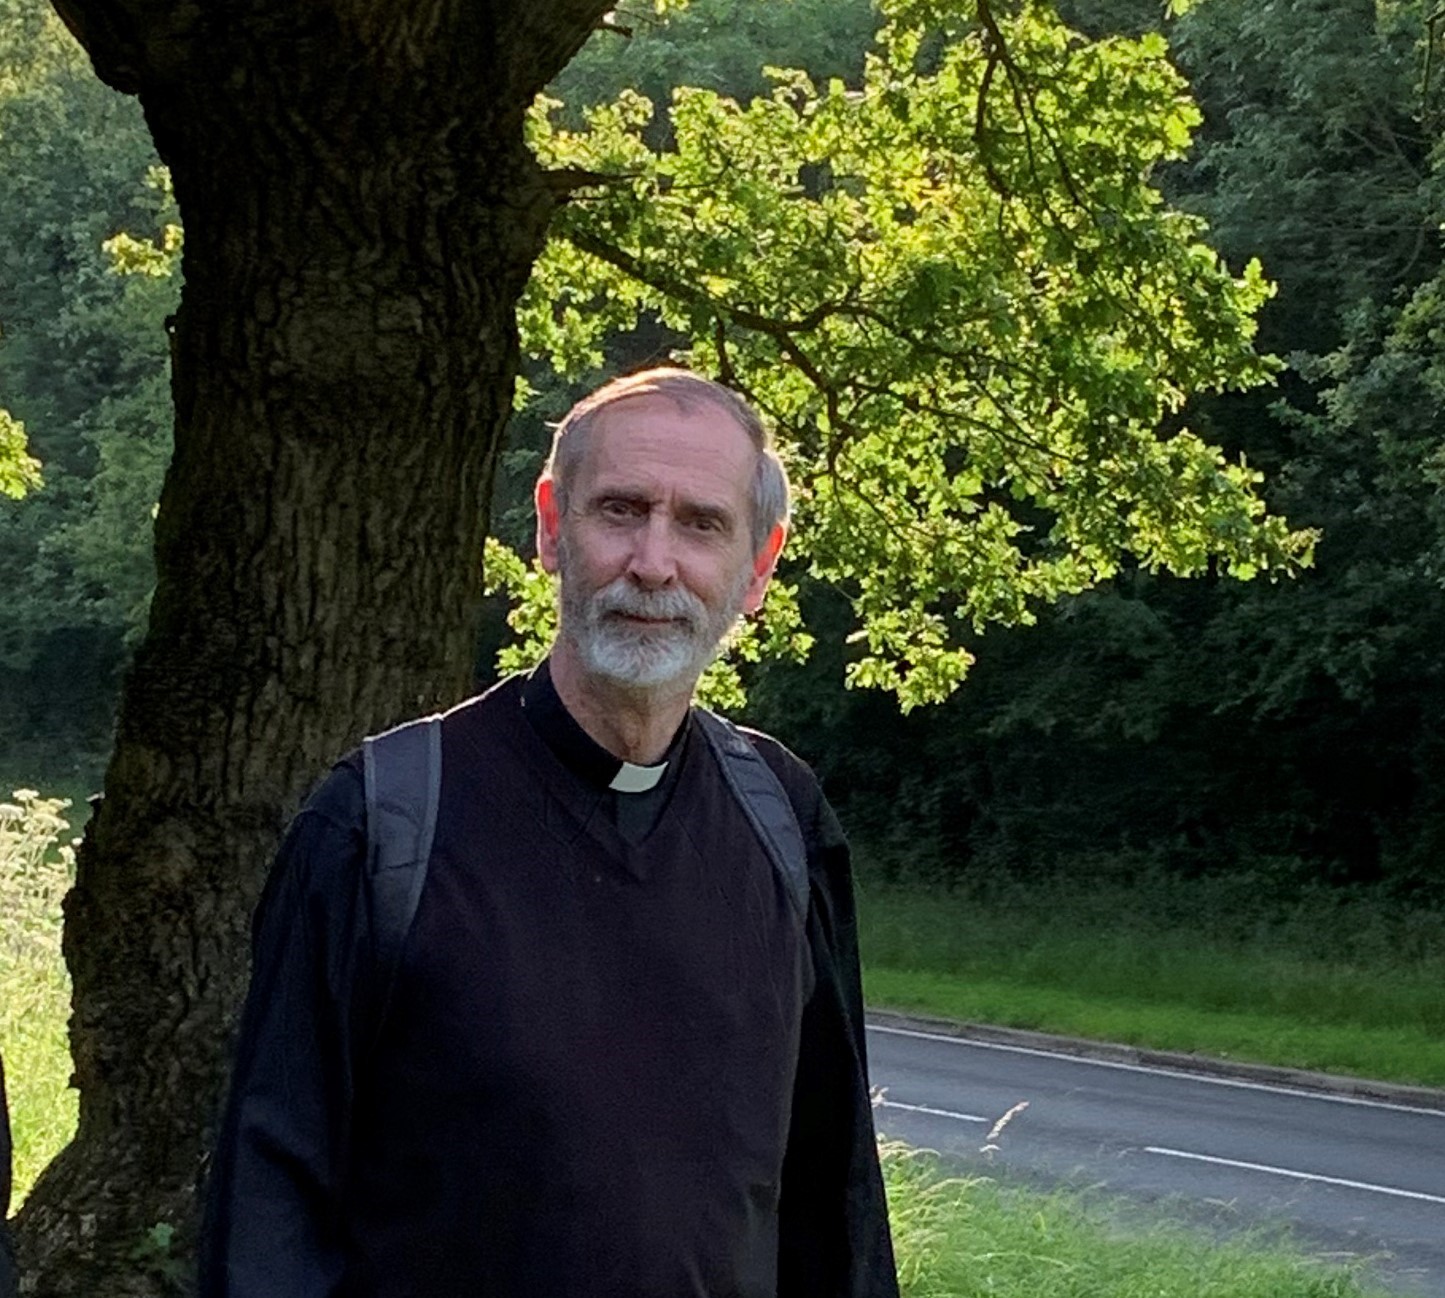 Bishop walking in trees